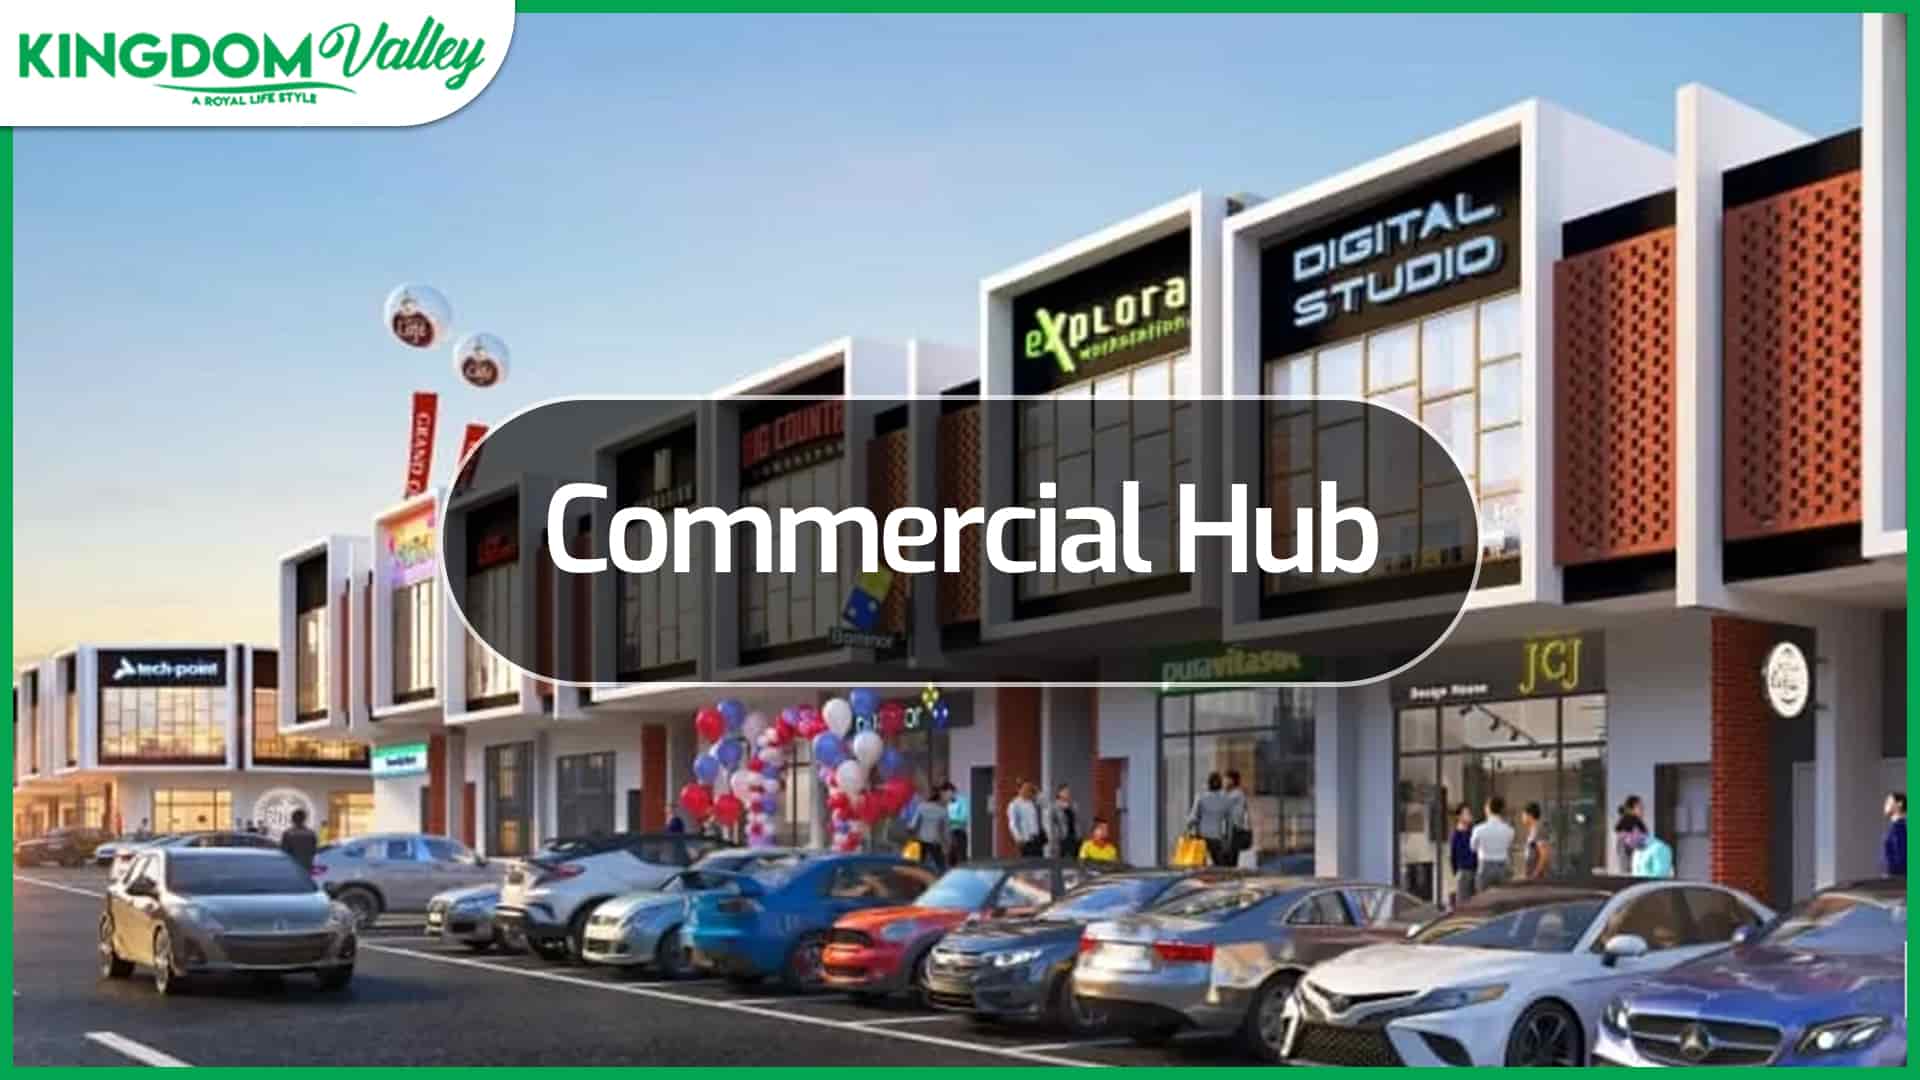 kindom valley Commercial Hub